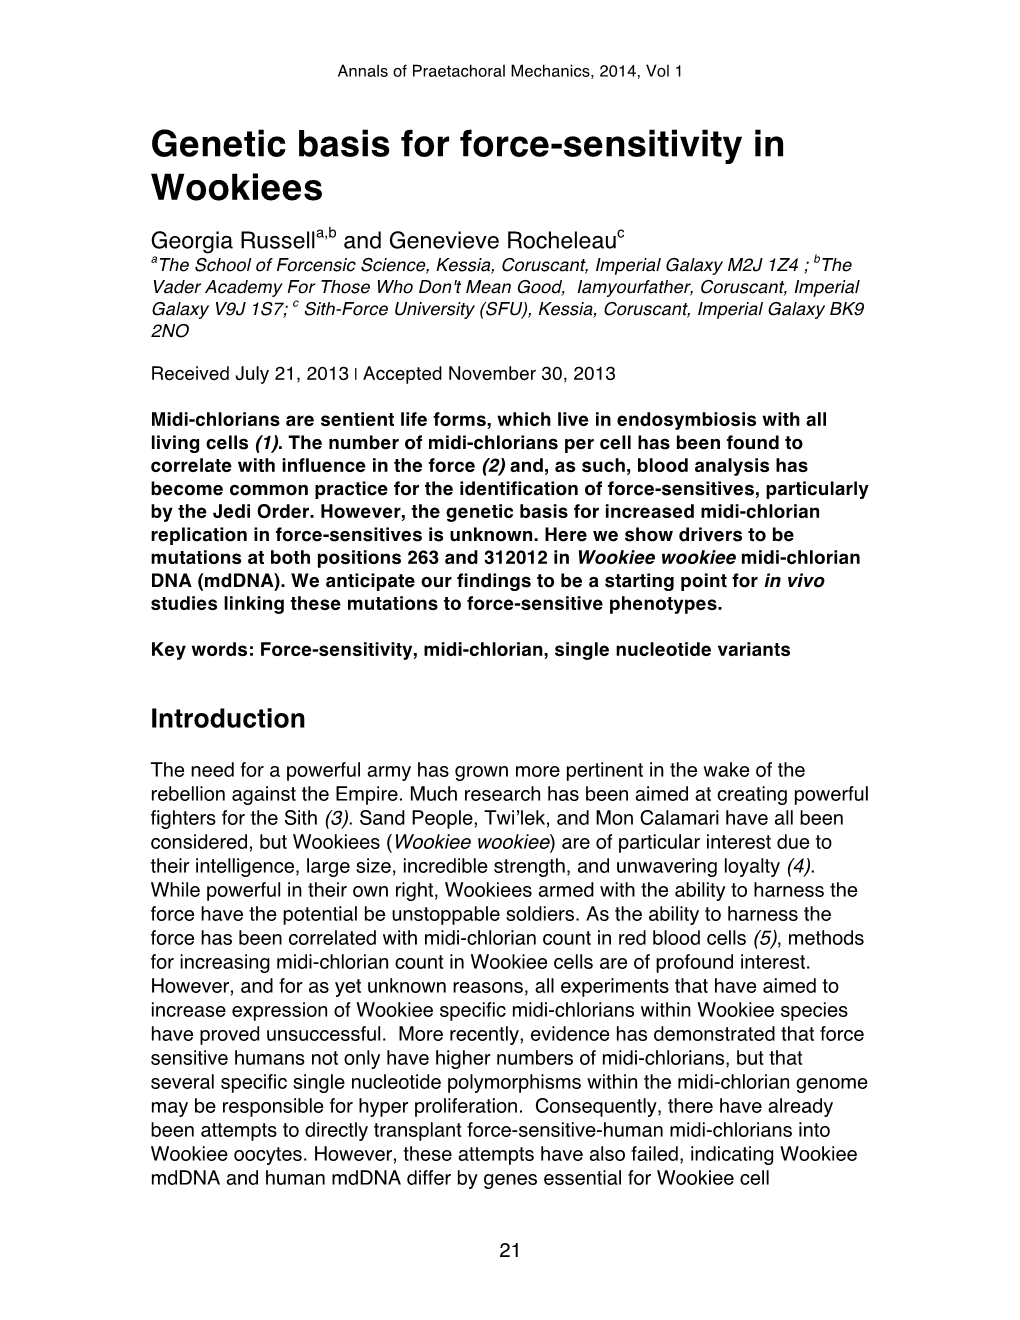 Genetic Basis for Force-Sensitivity in Wookiees